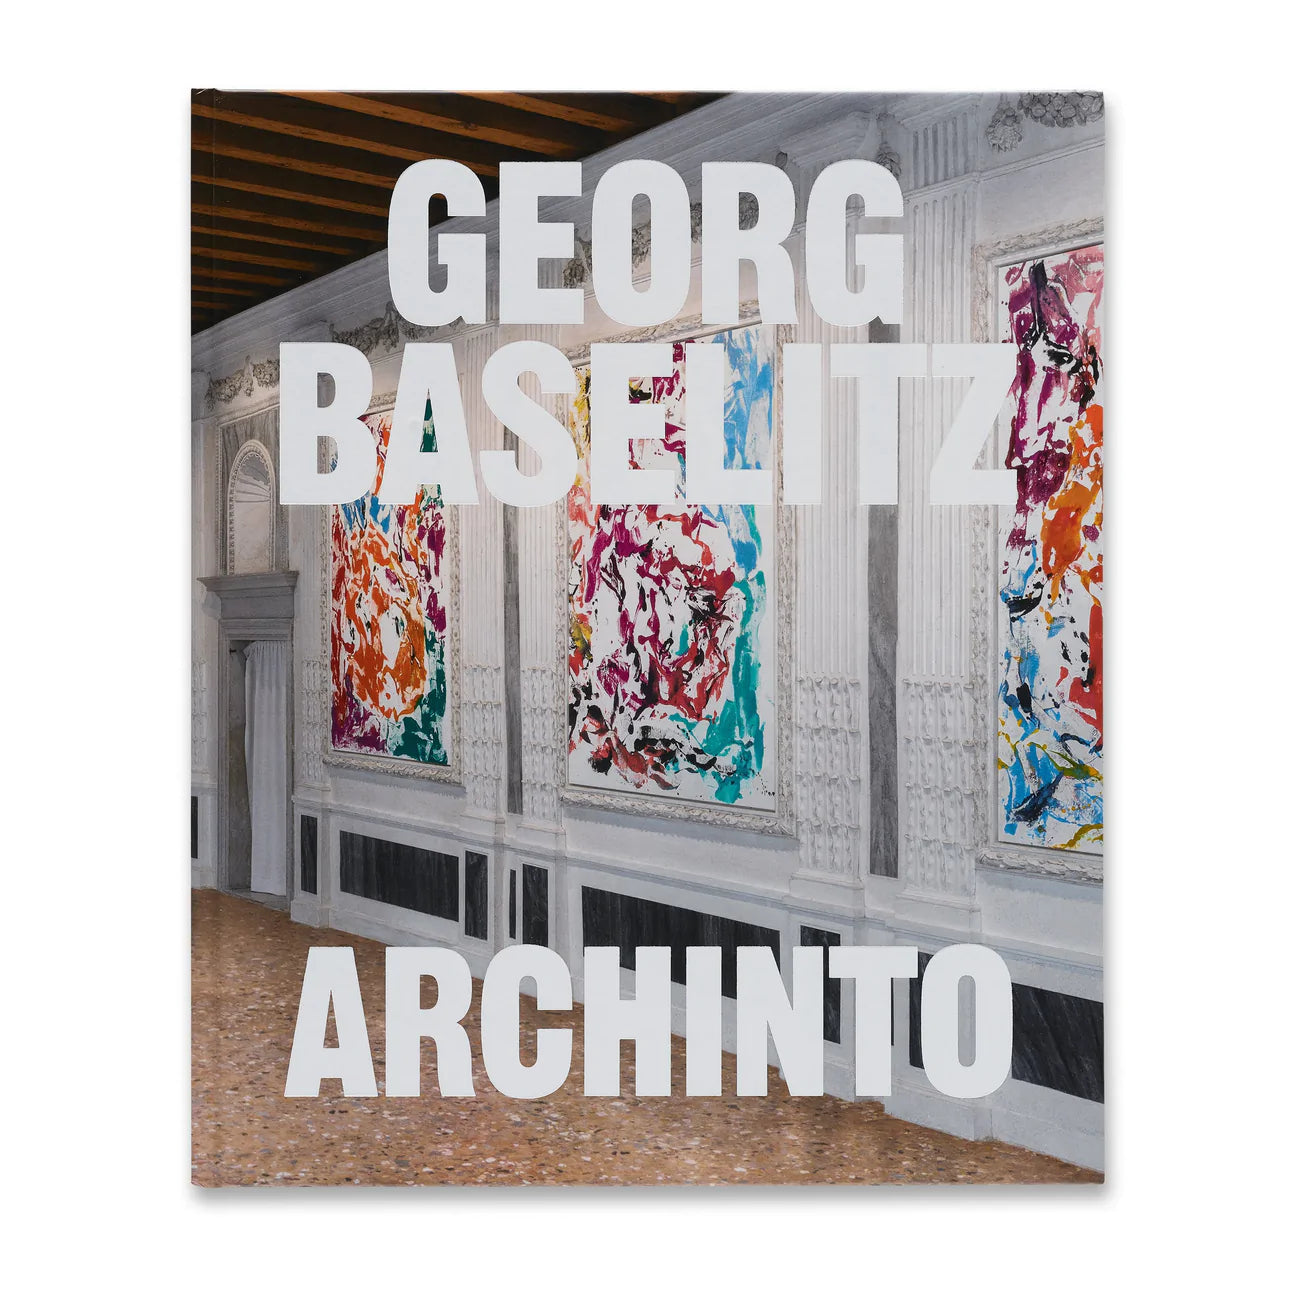 Georg Baselitz: ARCHINTO